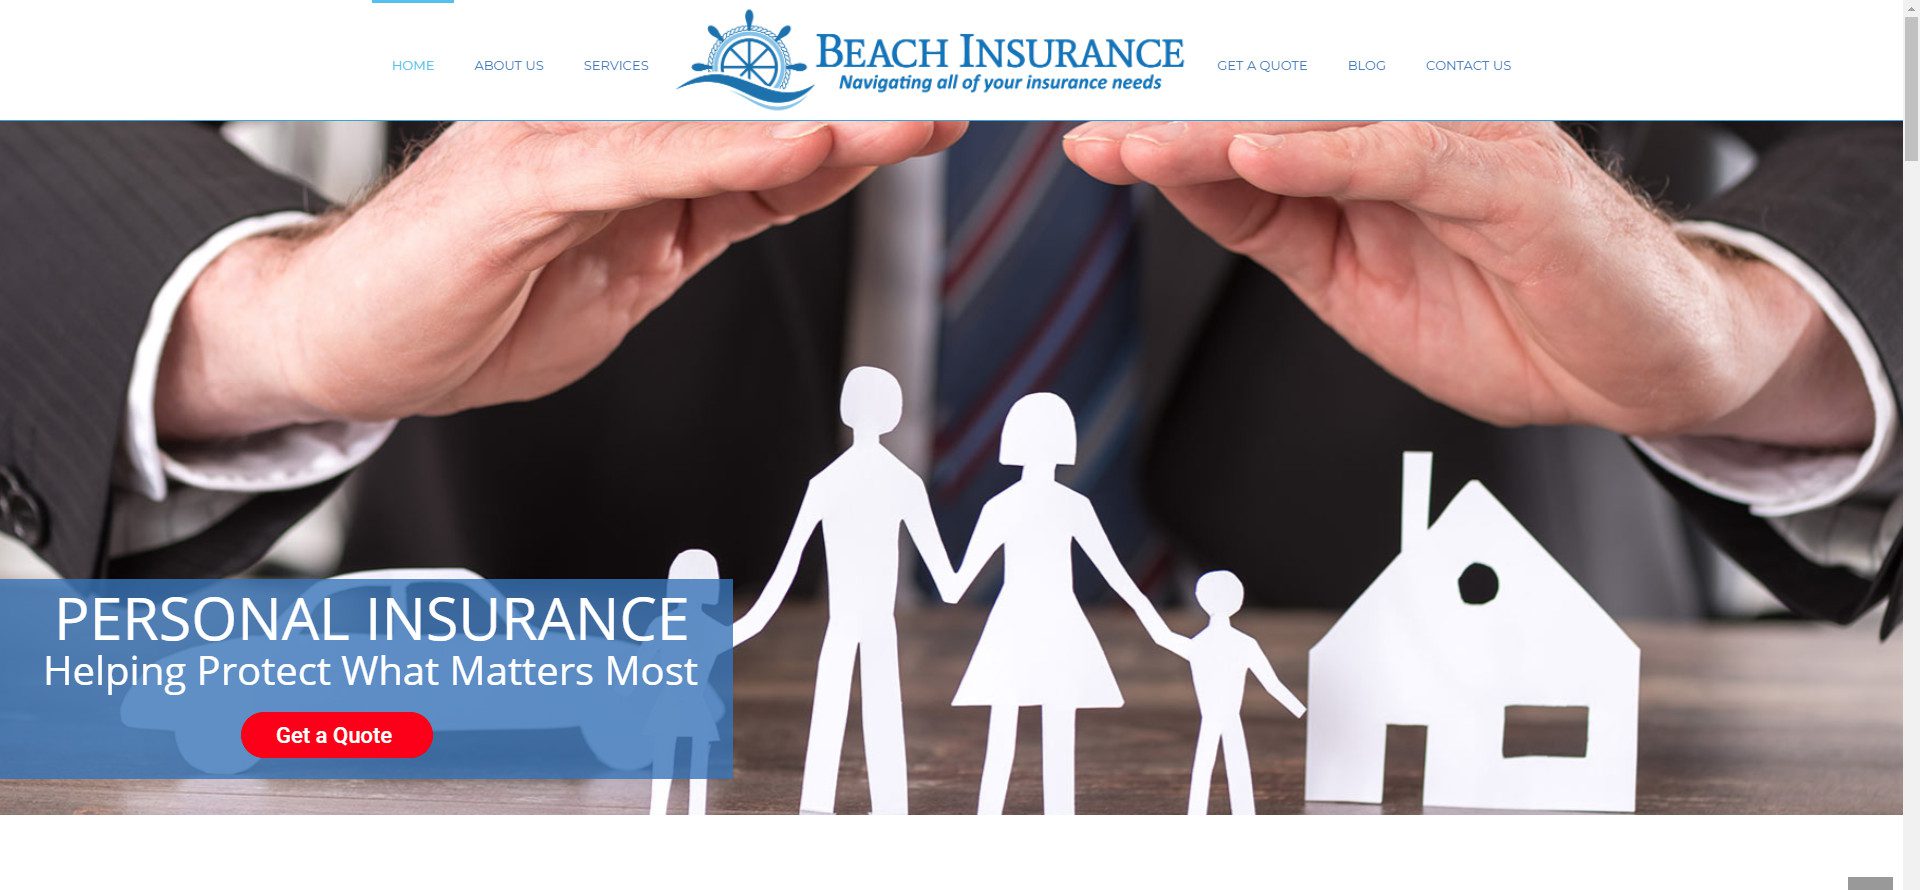 Beach Insurance